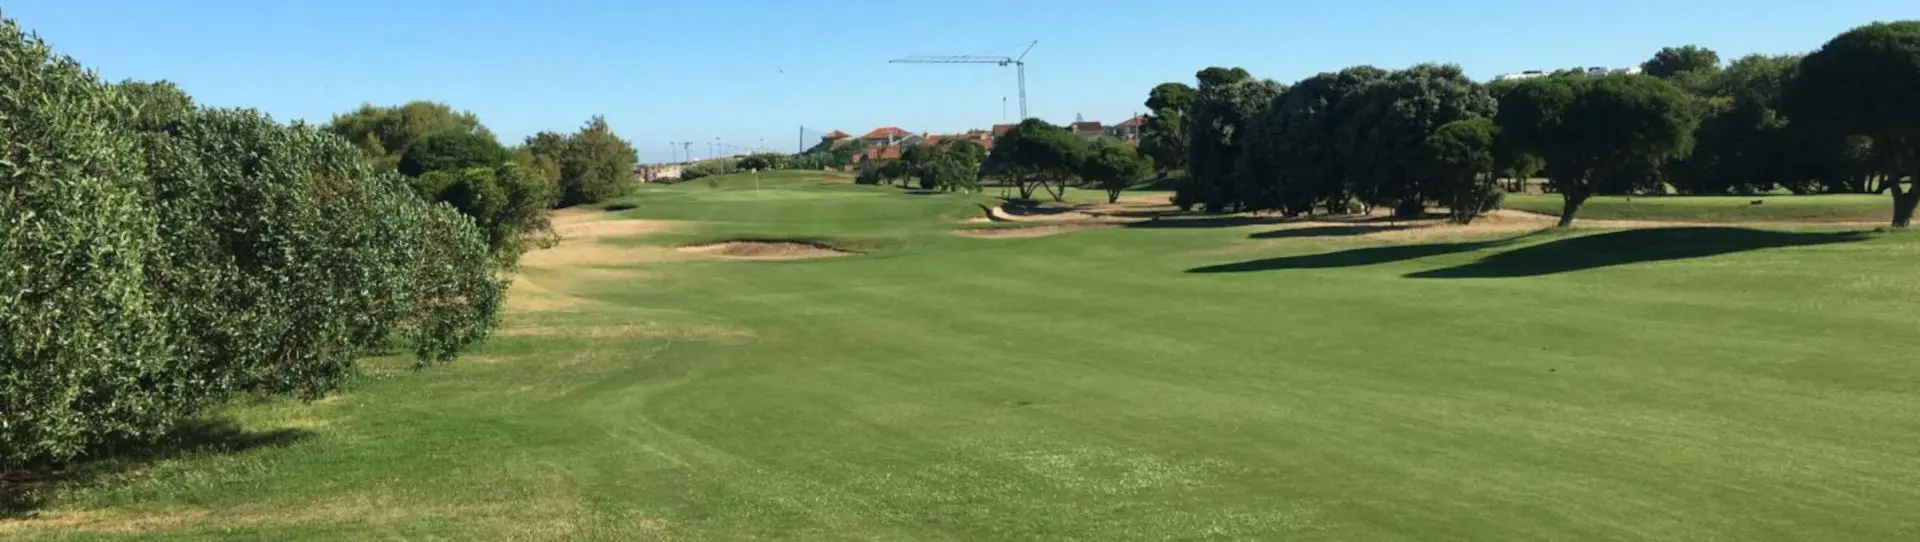 Portugal golf courses - Club Golf Miramar - Photo 2